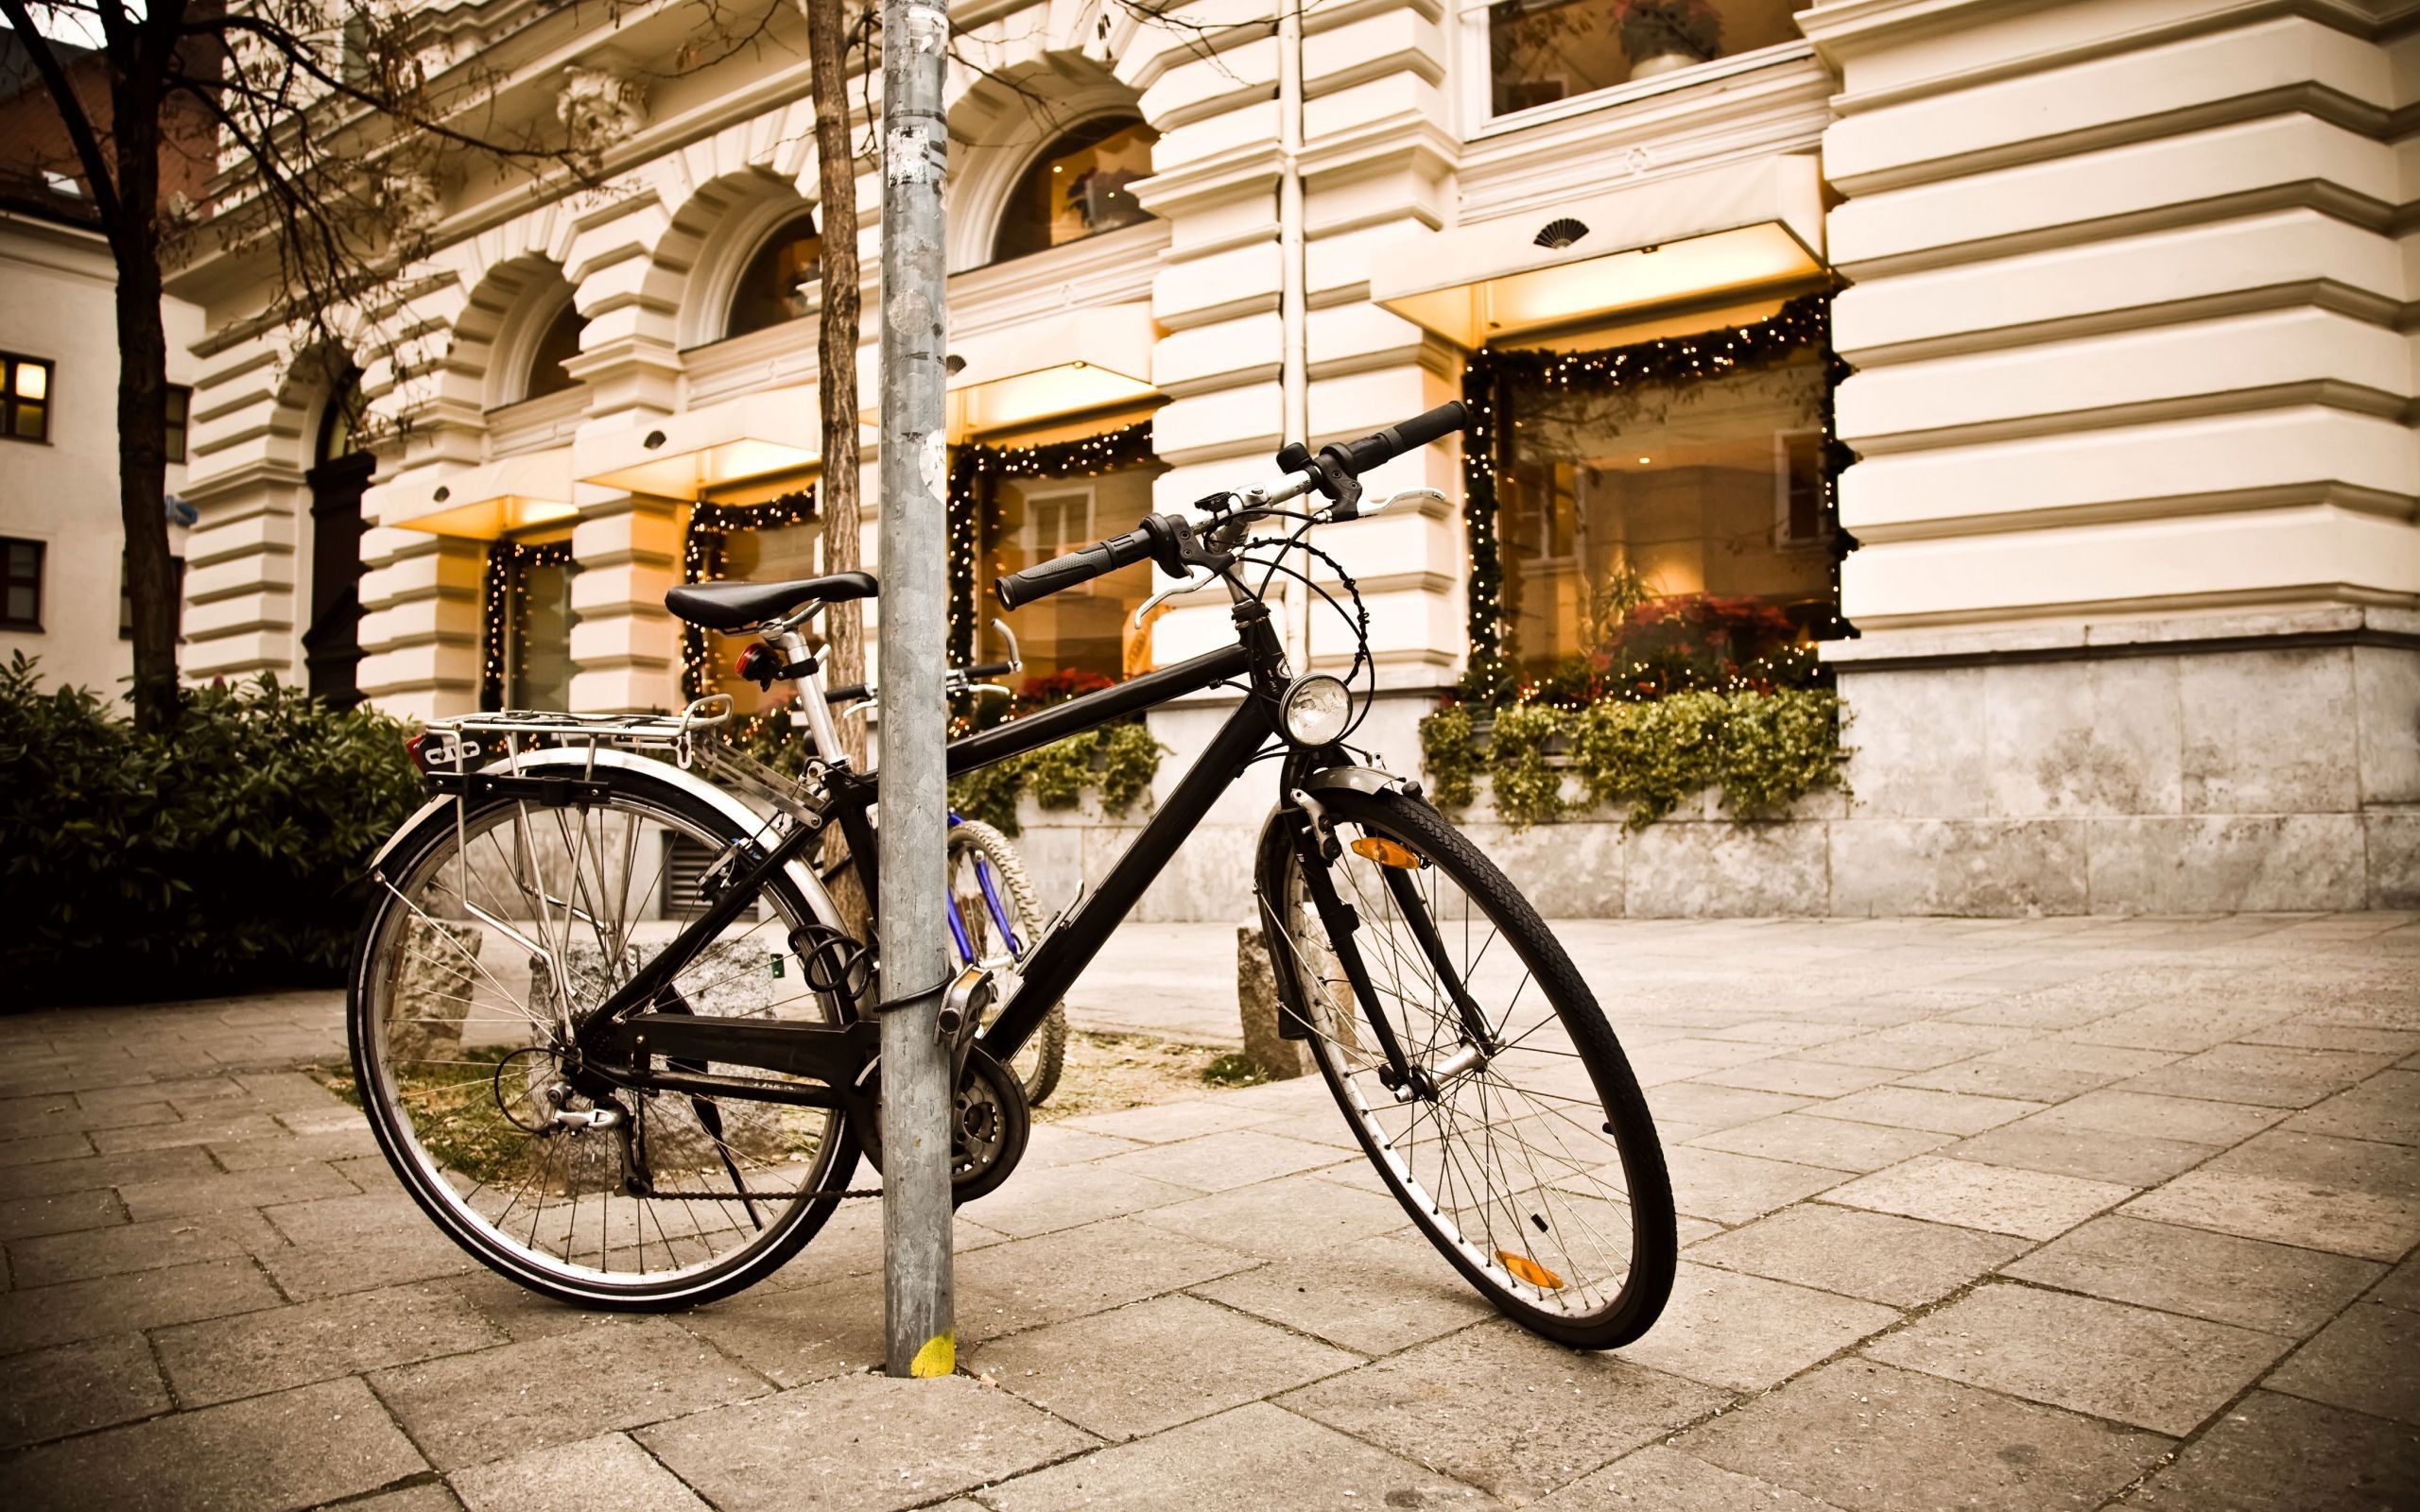 General 2560x1600 bicycle street urban vehicle